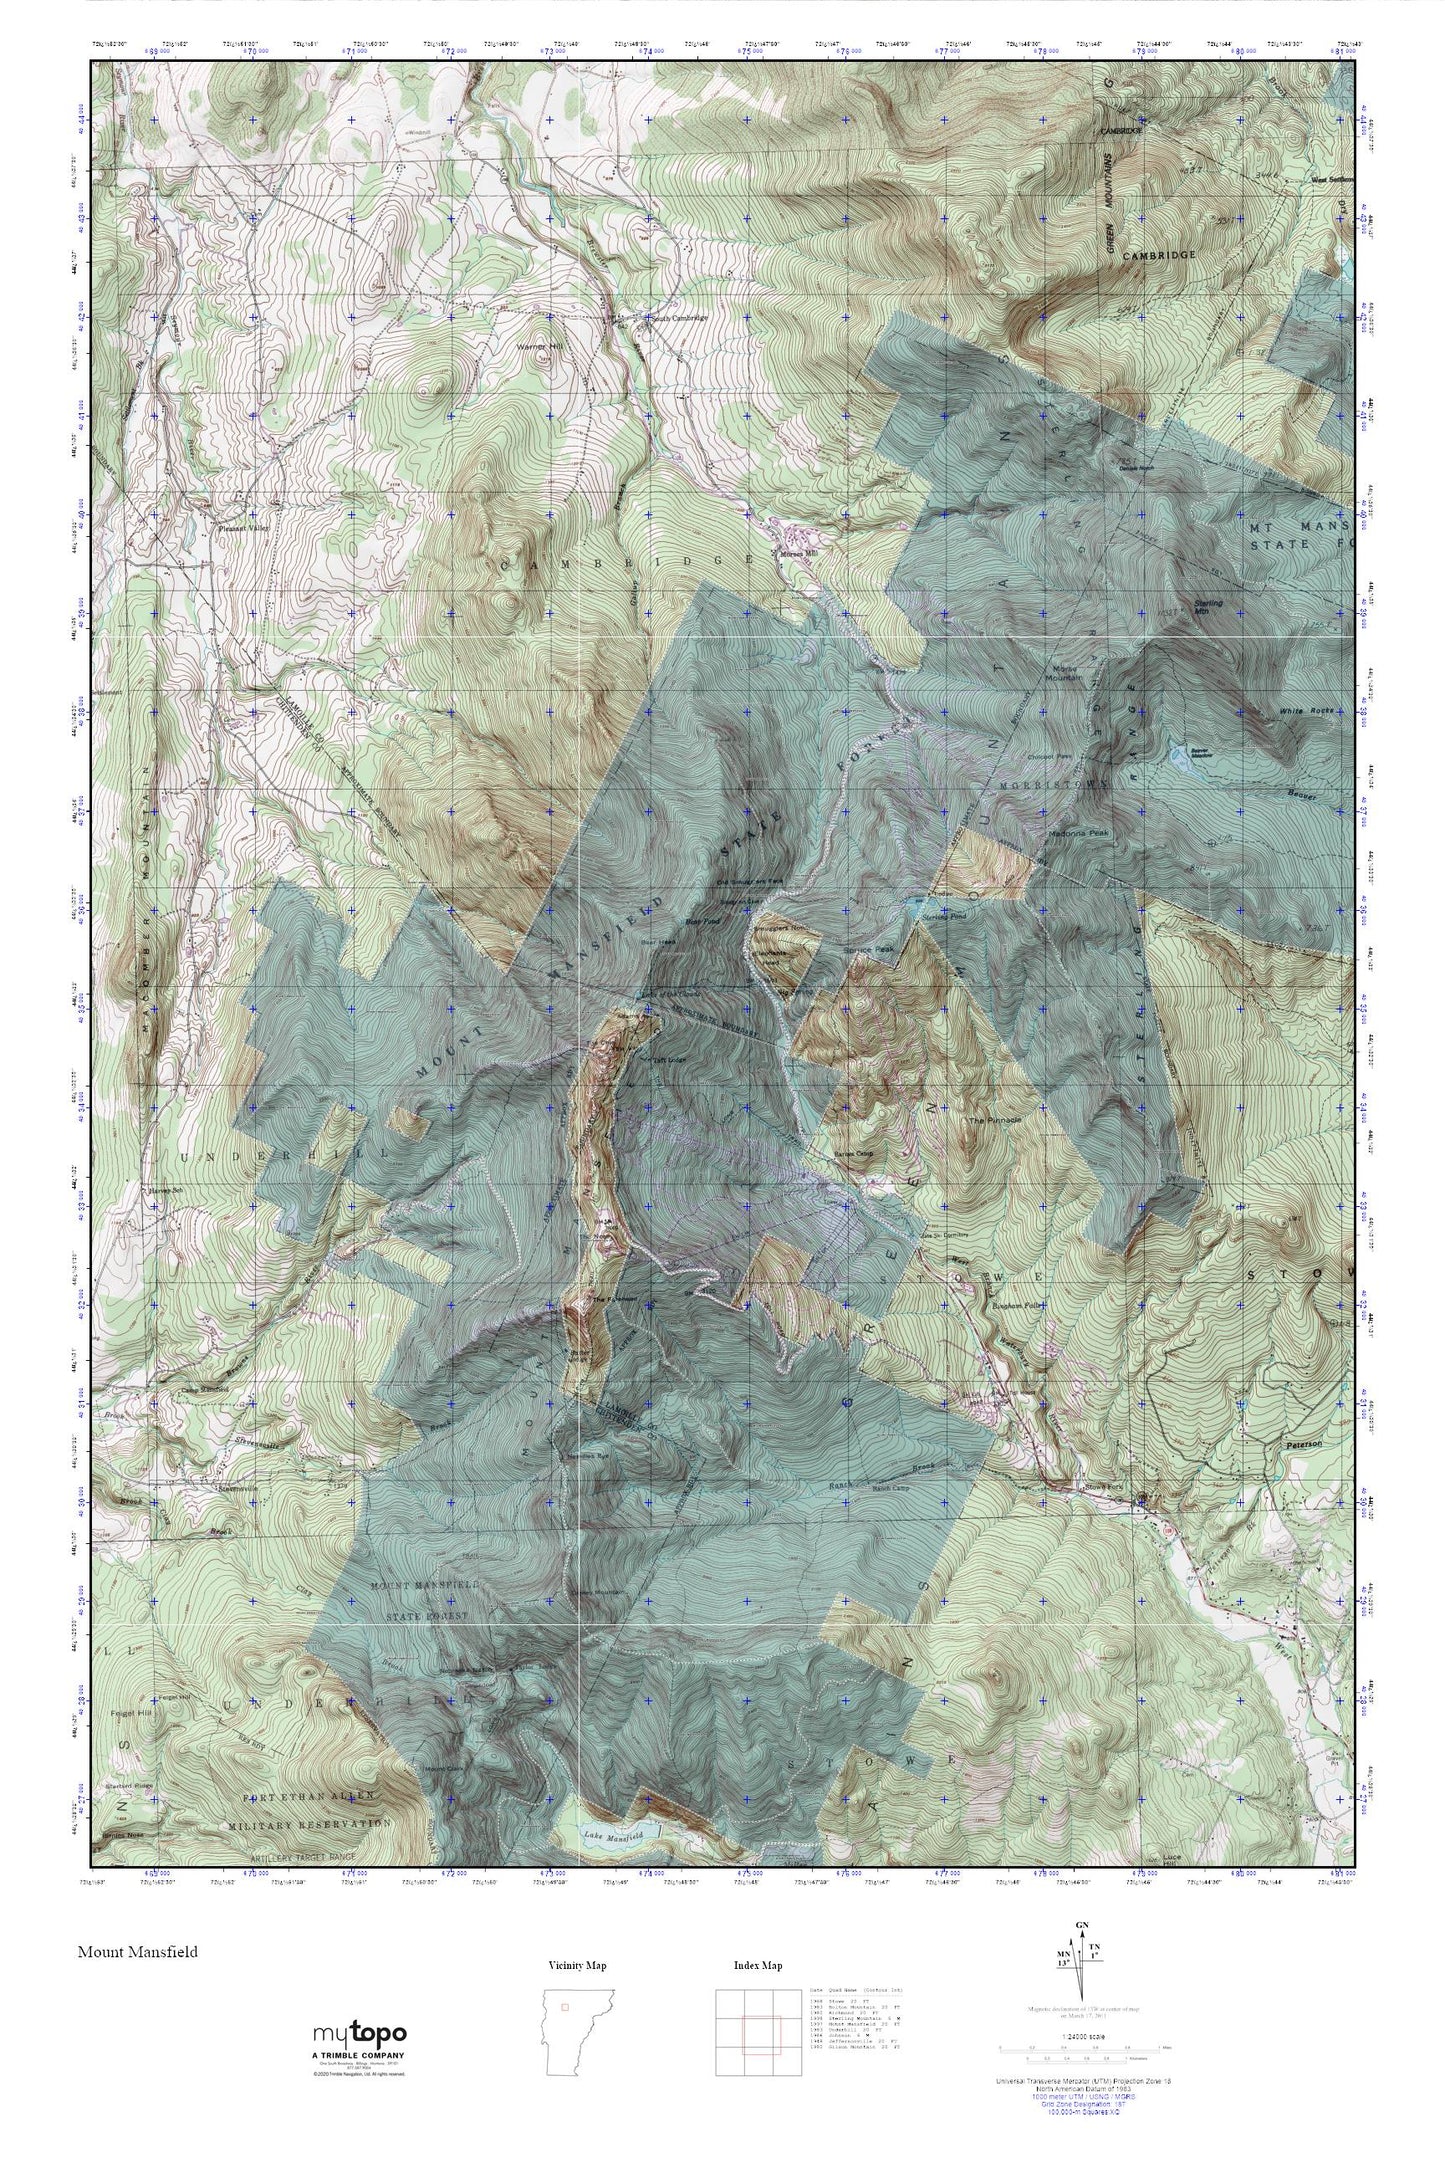 Mount Mansfield MyTopo Explorer Series Map Image